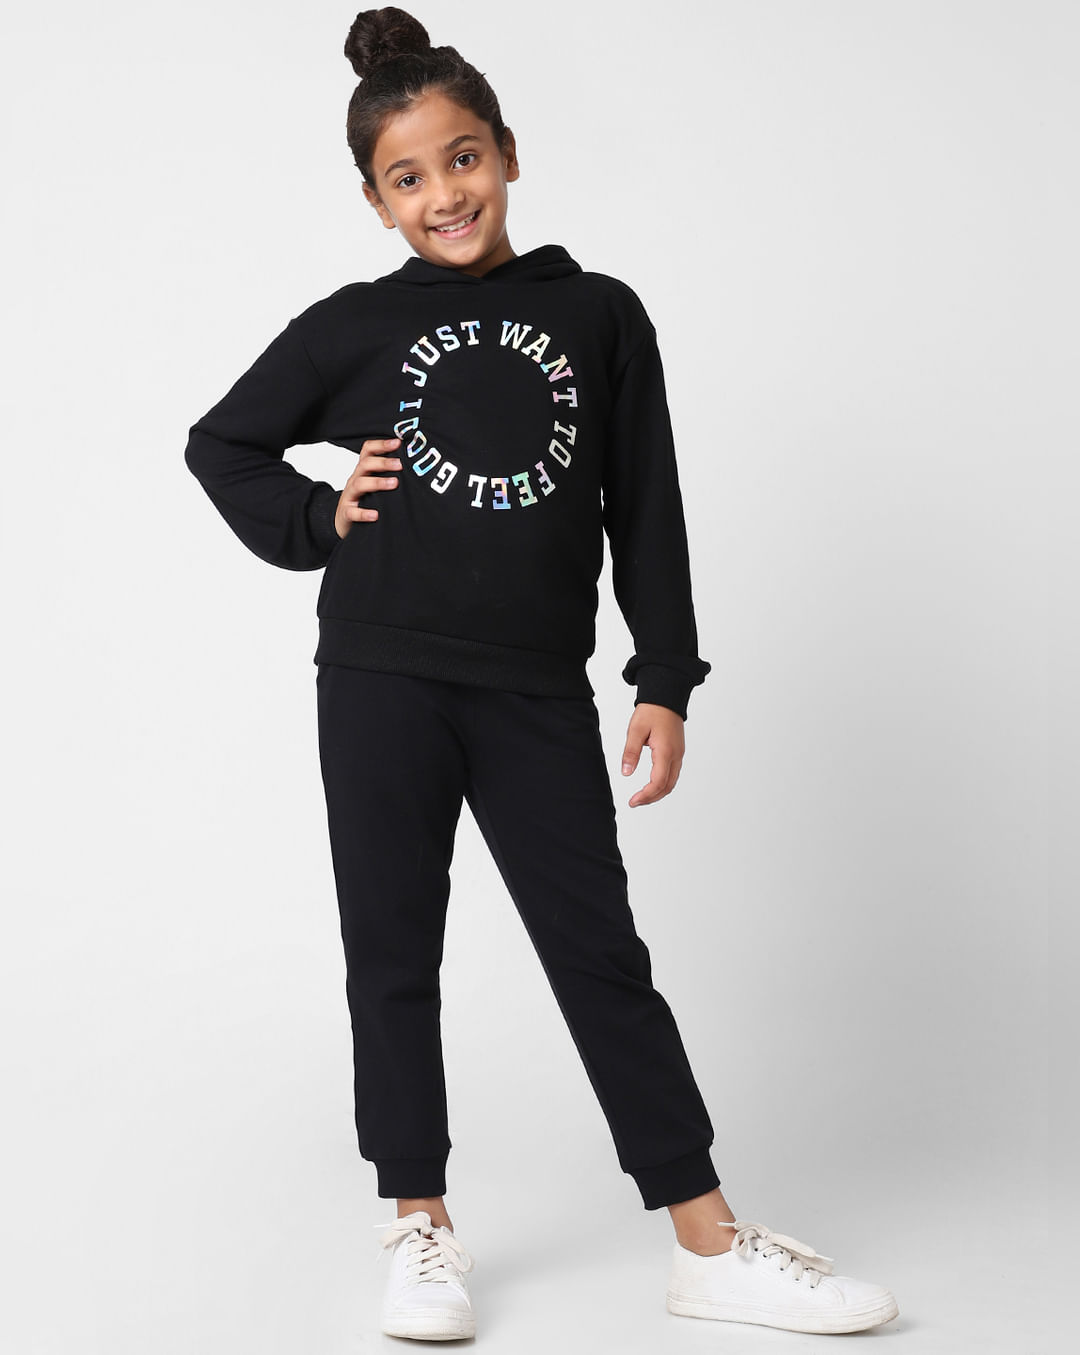 Buy Girls Black Foil Text Print Sweatshirt Online at KidsOnly